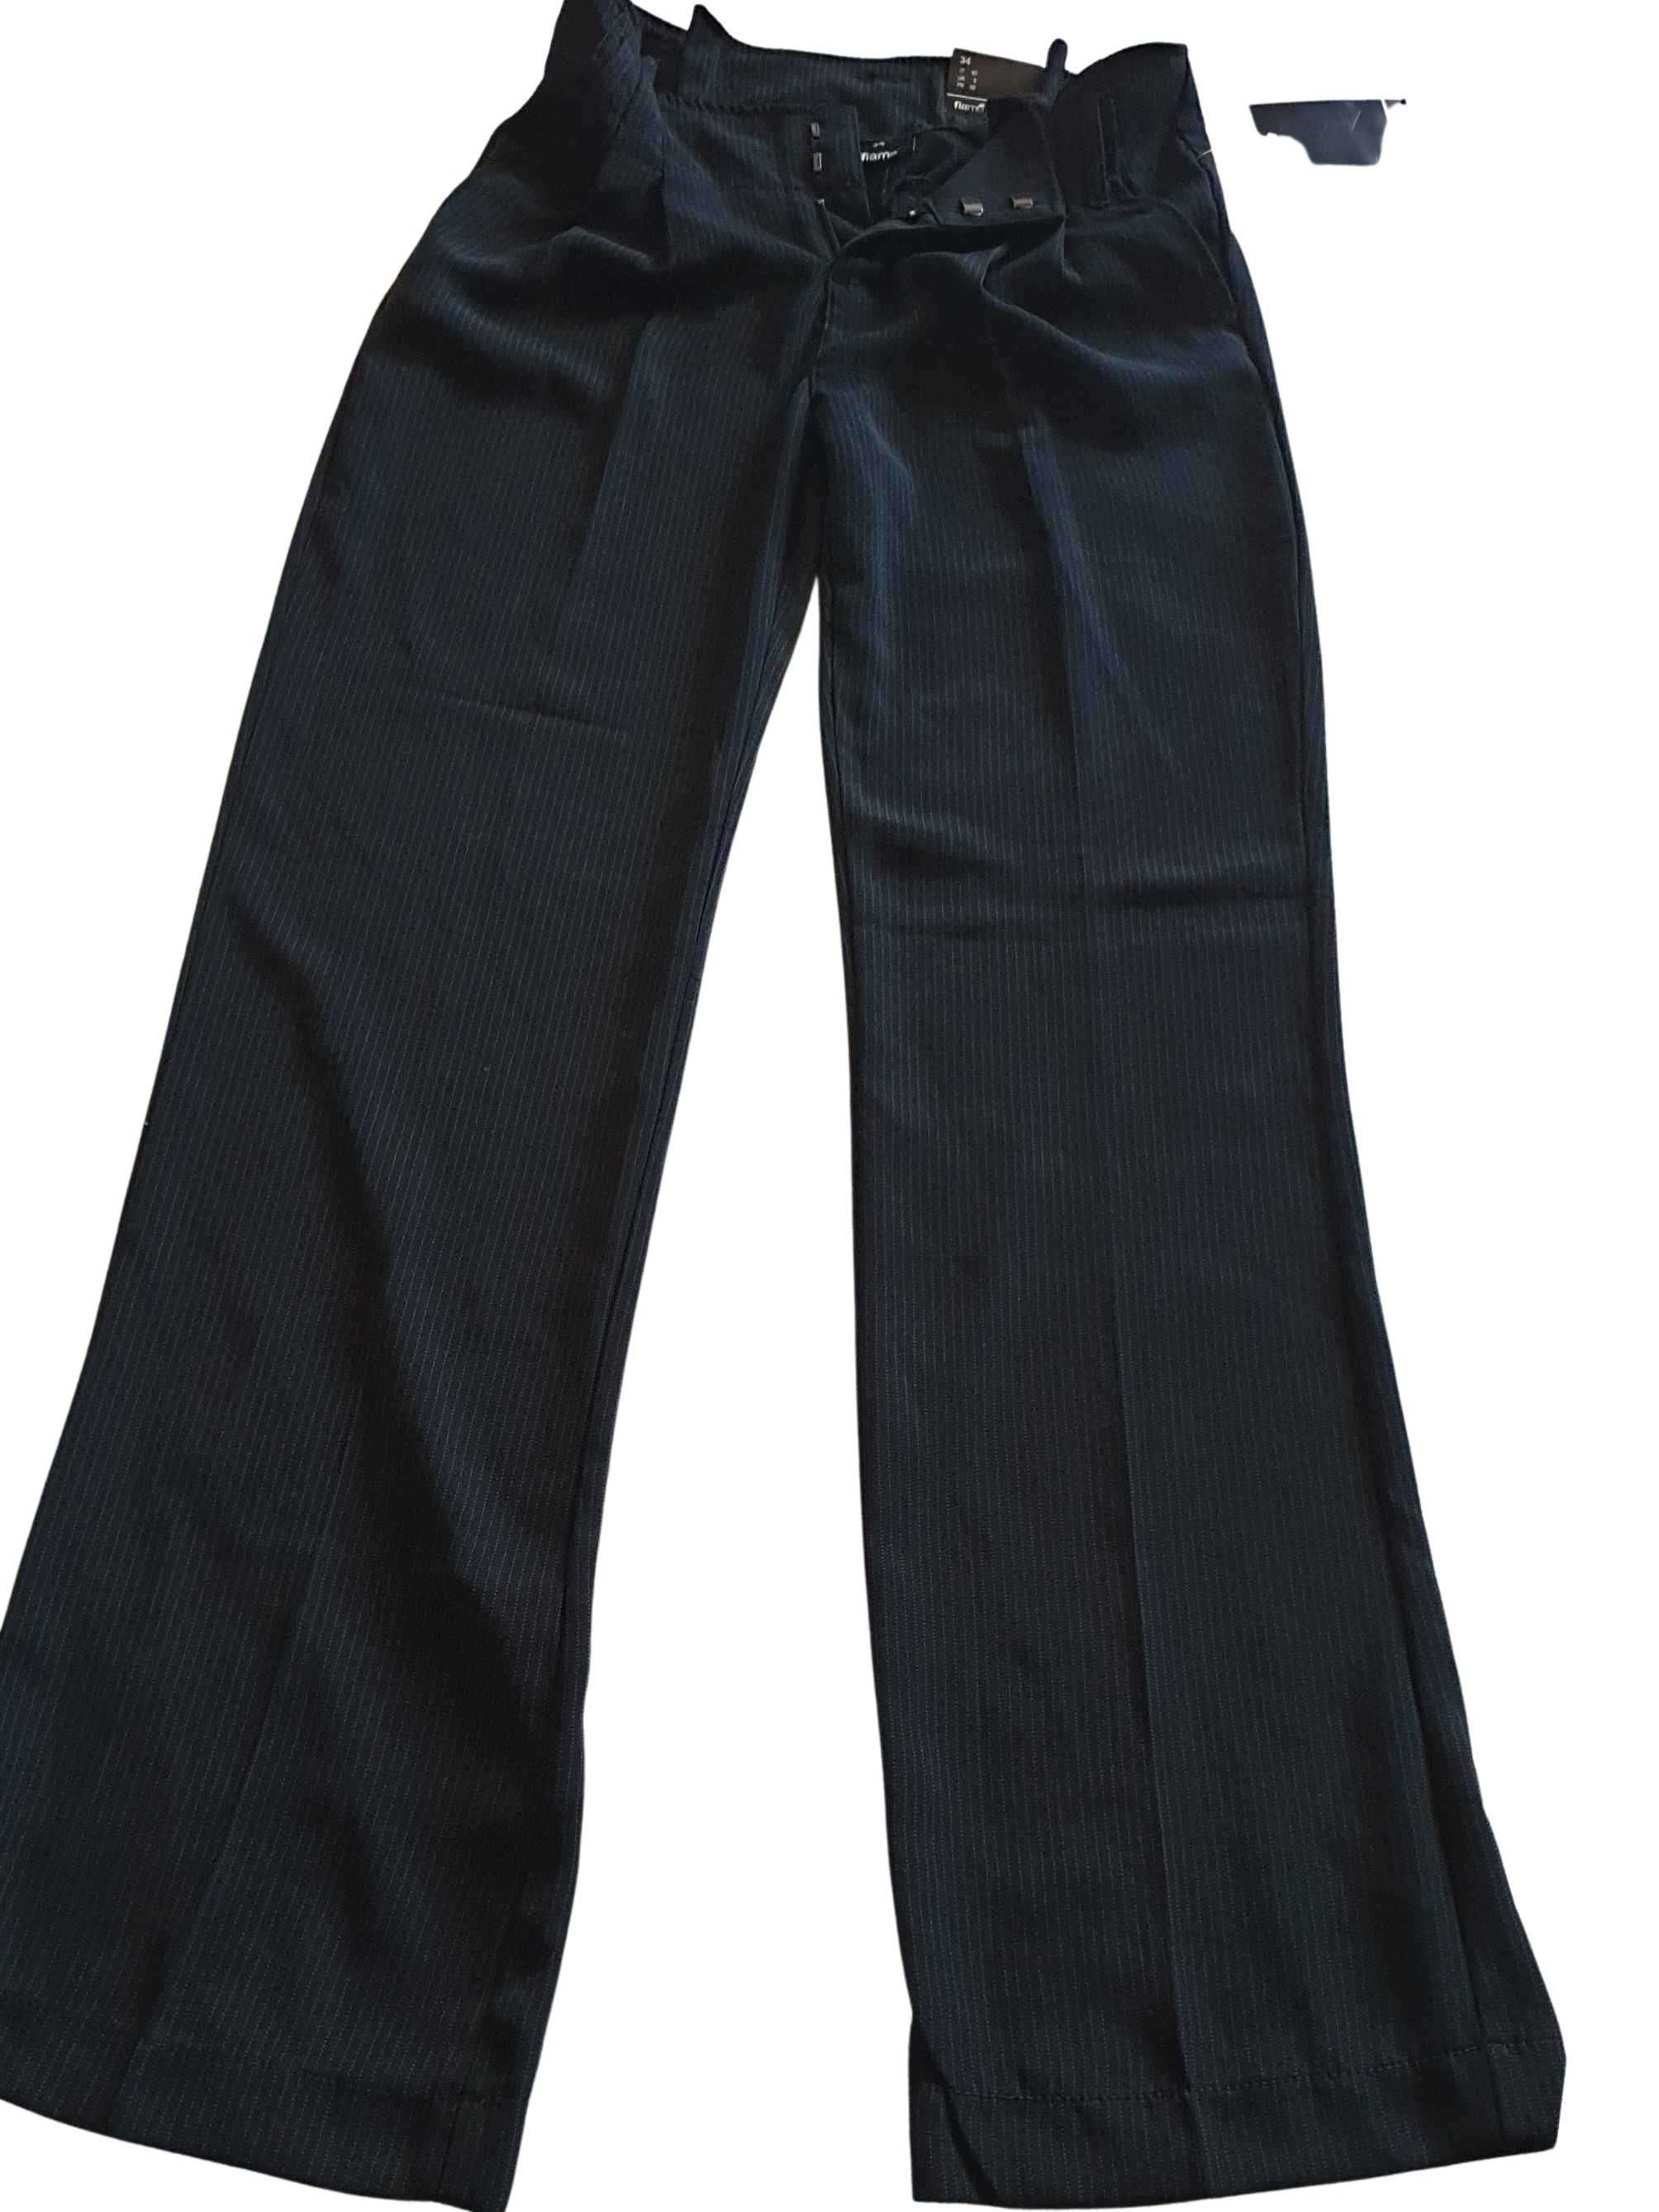 Pantaloni negri eleganti, FLAME, marime 34, S. Merg pentru un 36-38